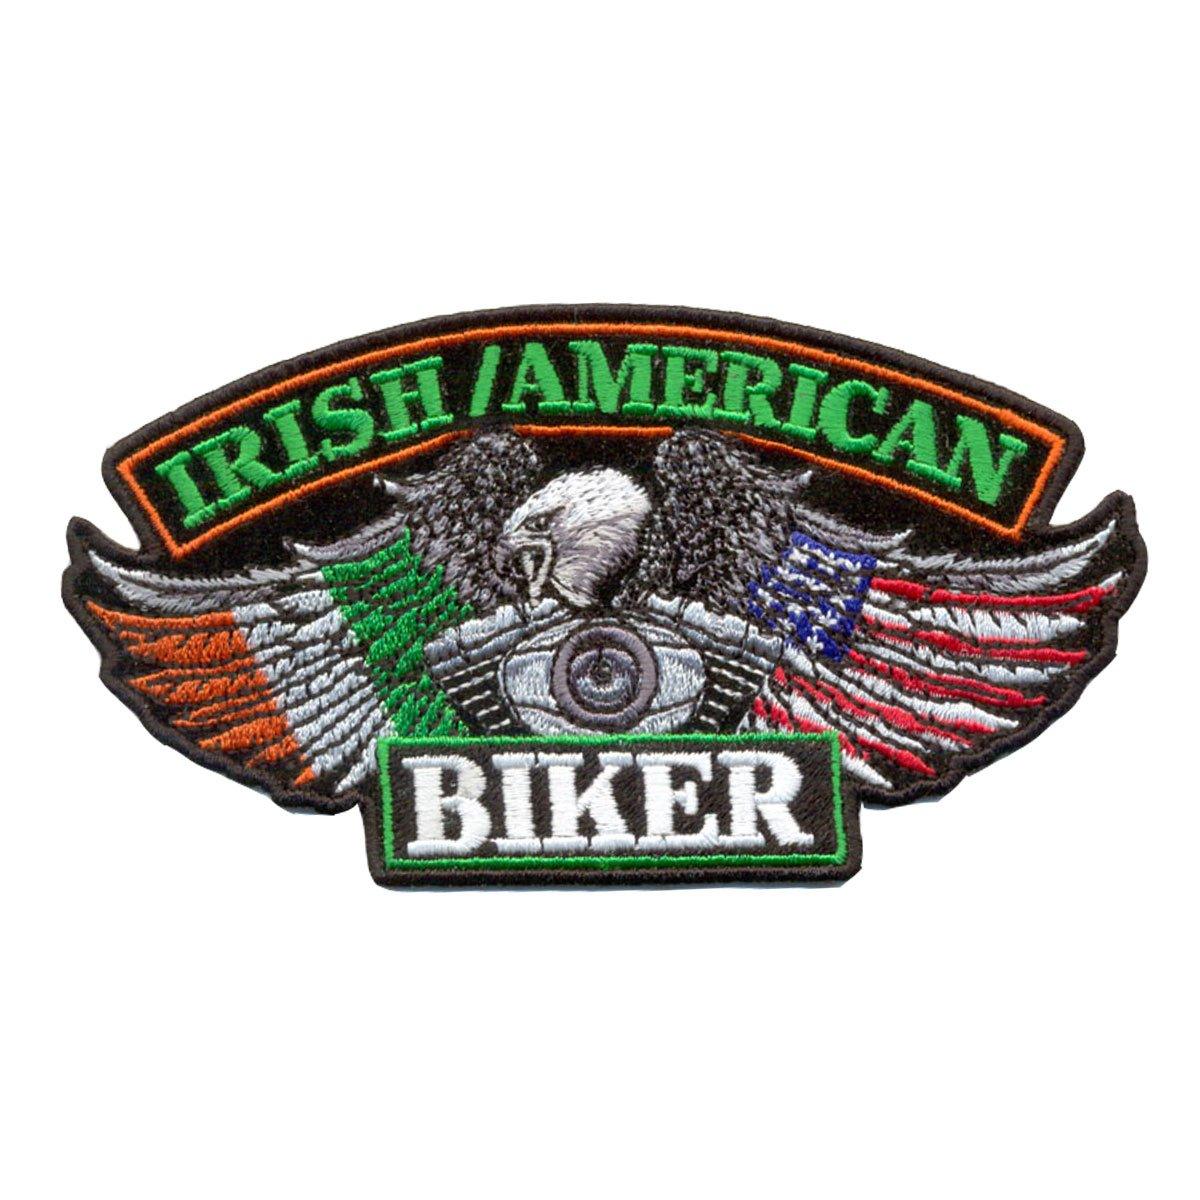 Irish/American Biker 5" x 3" Patch - Military Republic